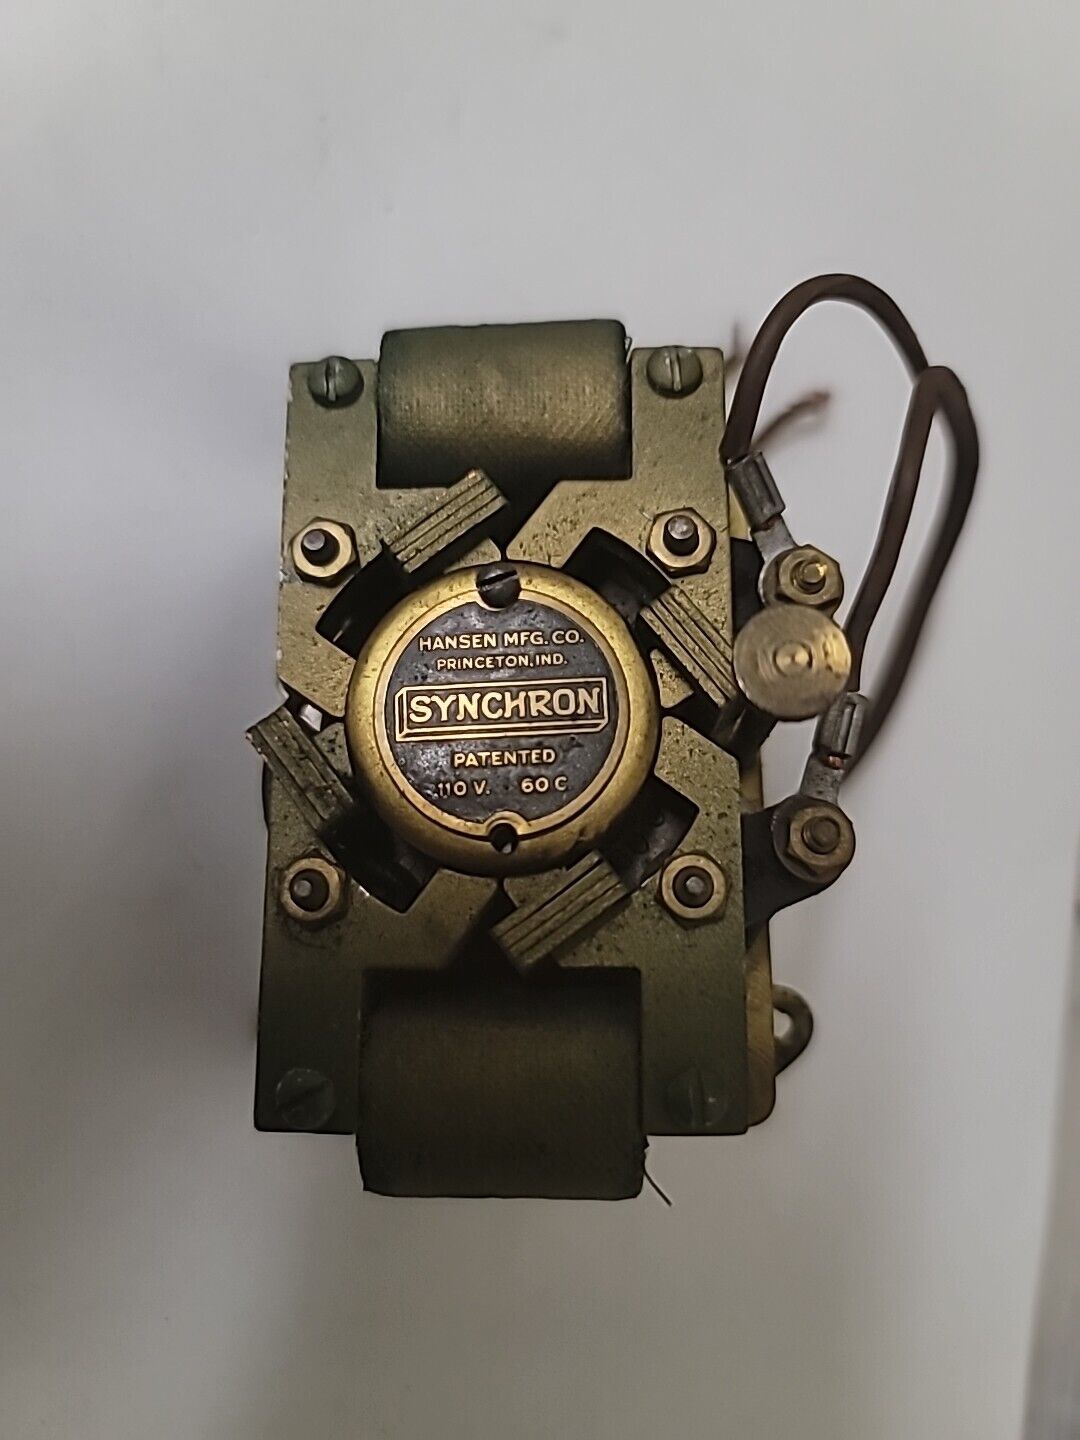 Vintage Hansen Synchron 610 Electric Clock Motor TESTED WORKS Brass Body Golden